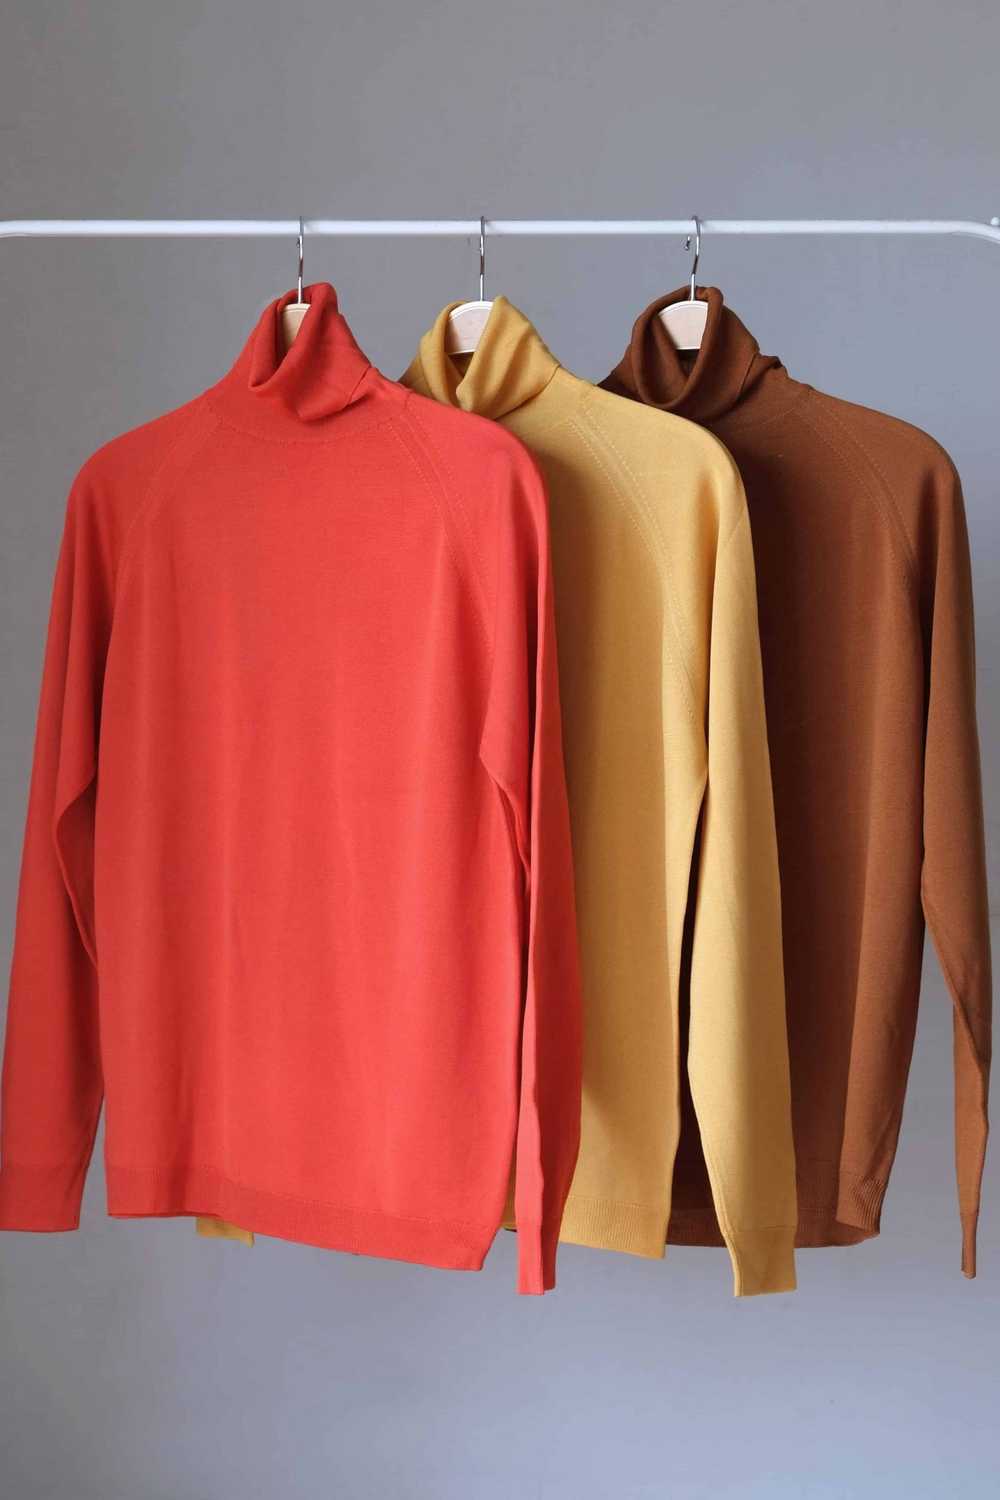 MORLEY 70's Turtleneck Sweater - image 5